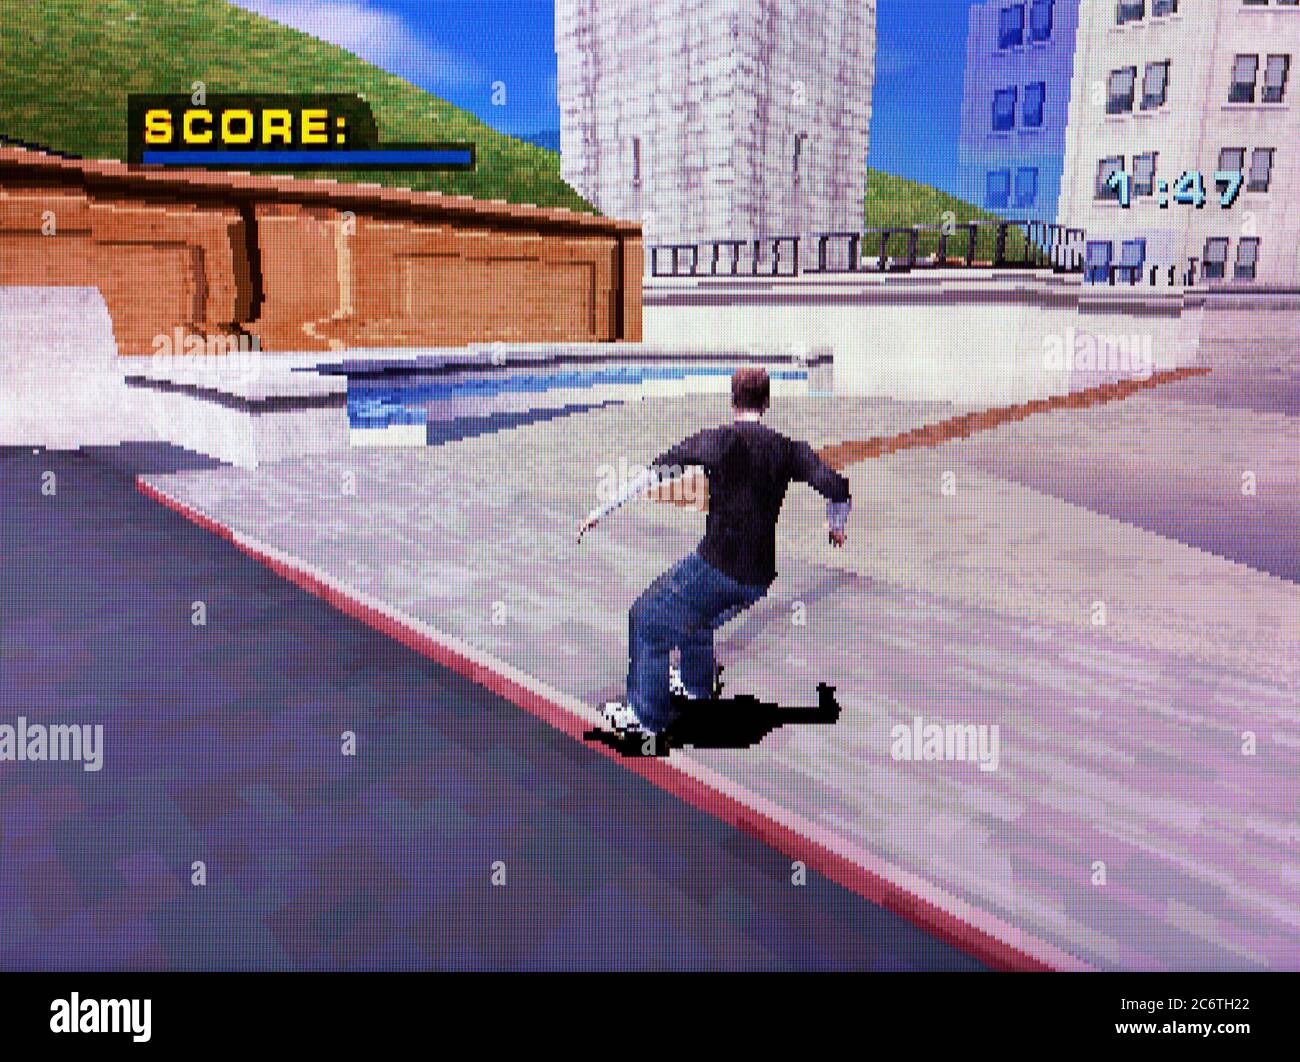 Tony Hawk's Pro Skater 4 - Sony Playstation 1 PS1 PSX - Editorial use only  Stock Photo - Alamy